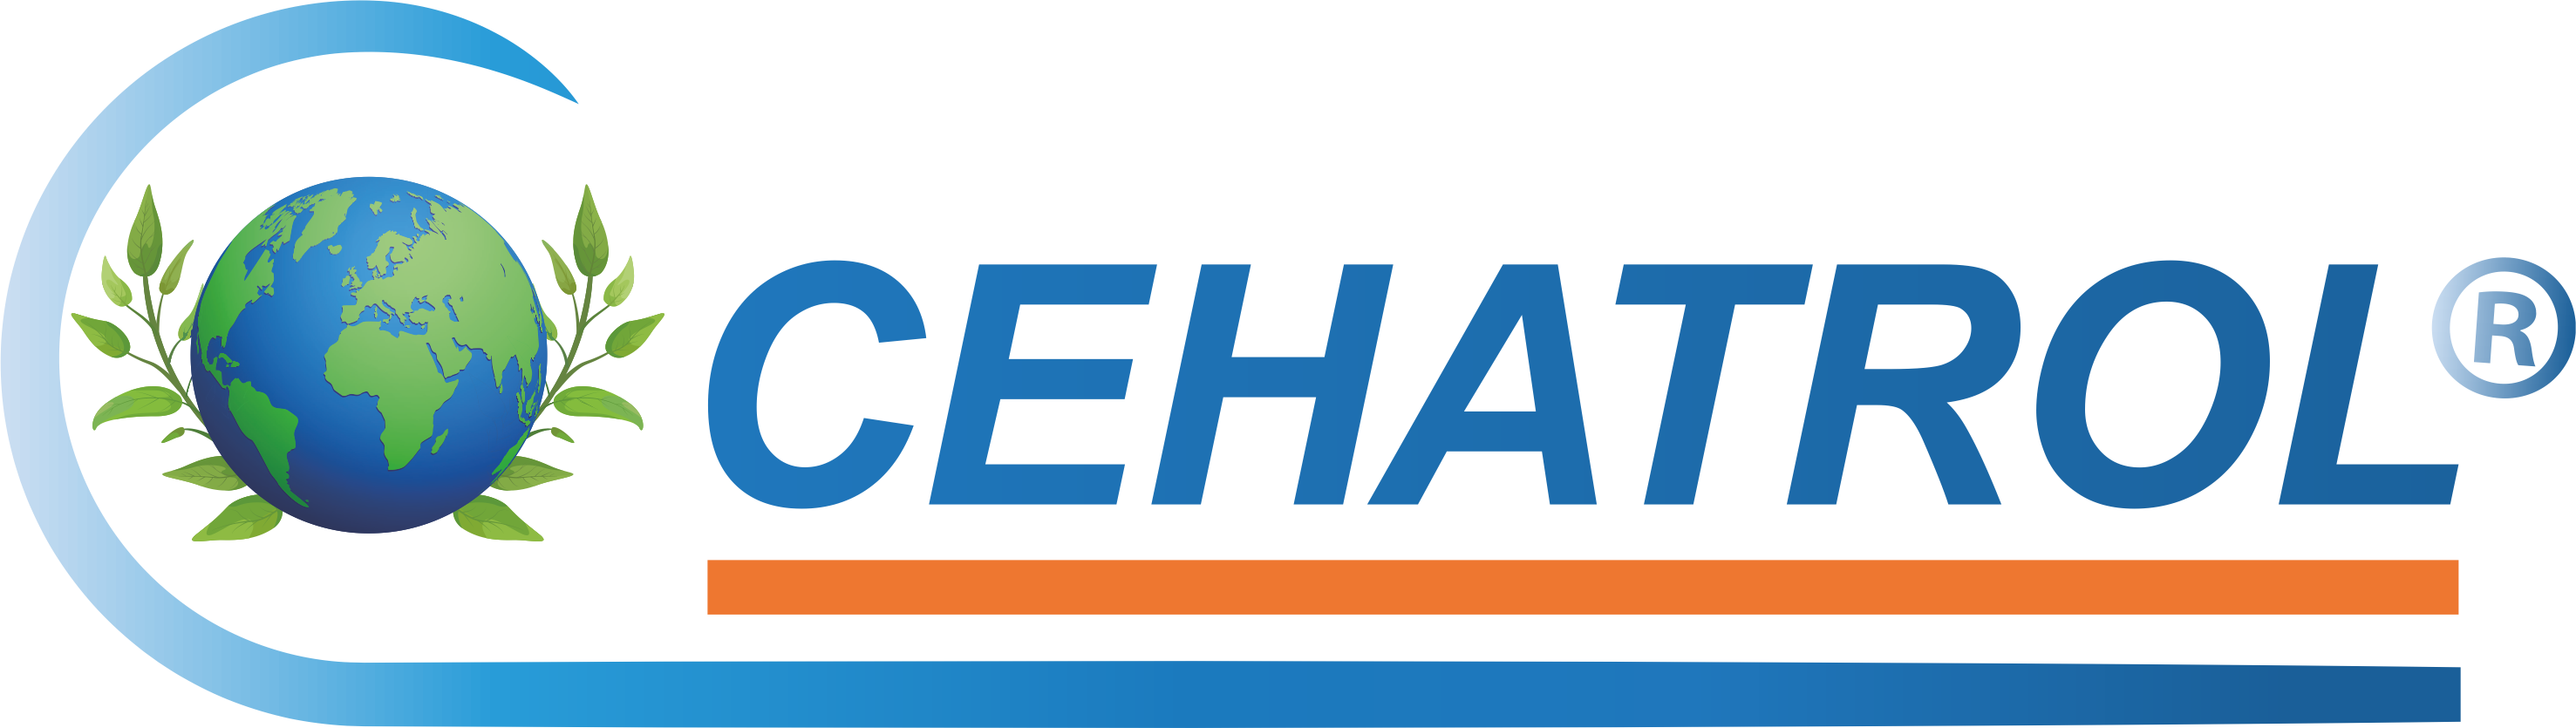 CEHATROL_Logo.png.png